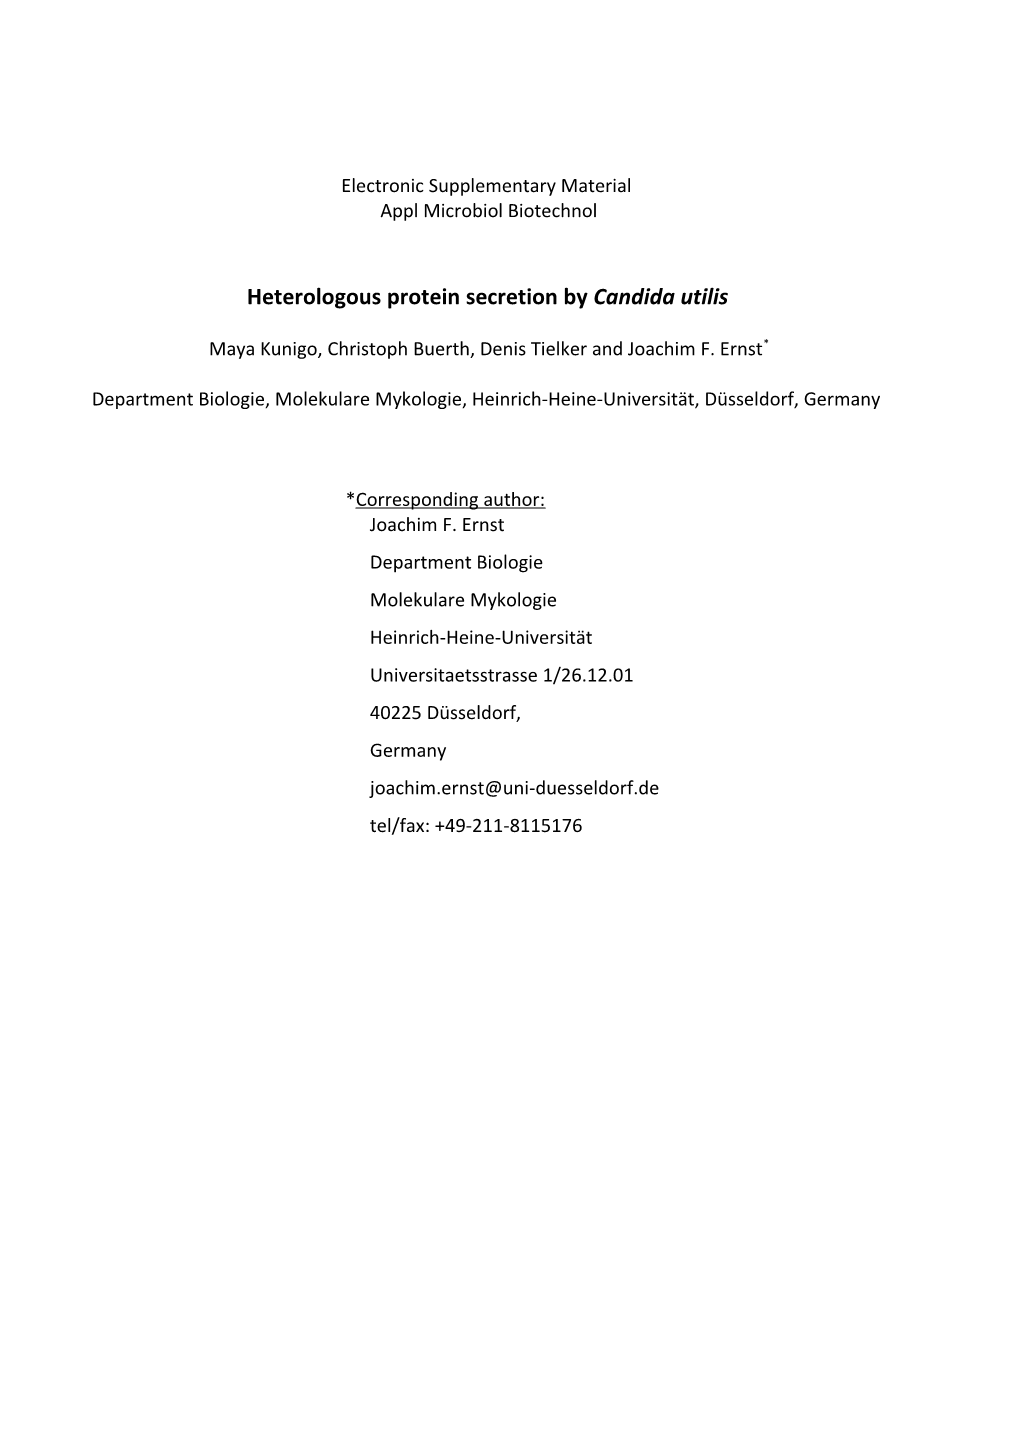 Heterologous Protein Secretion by Candida Utilis